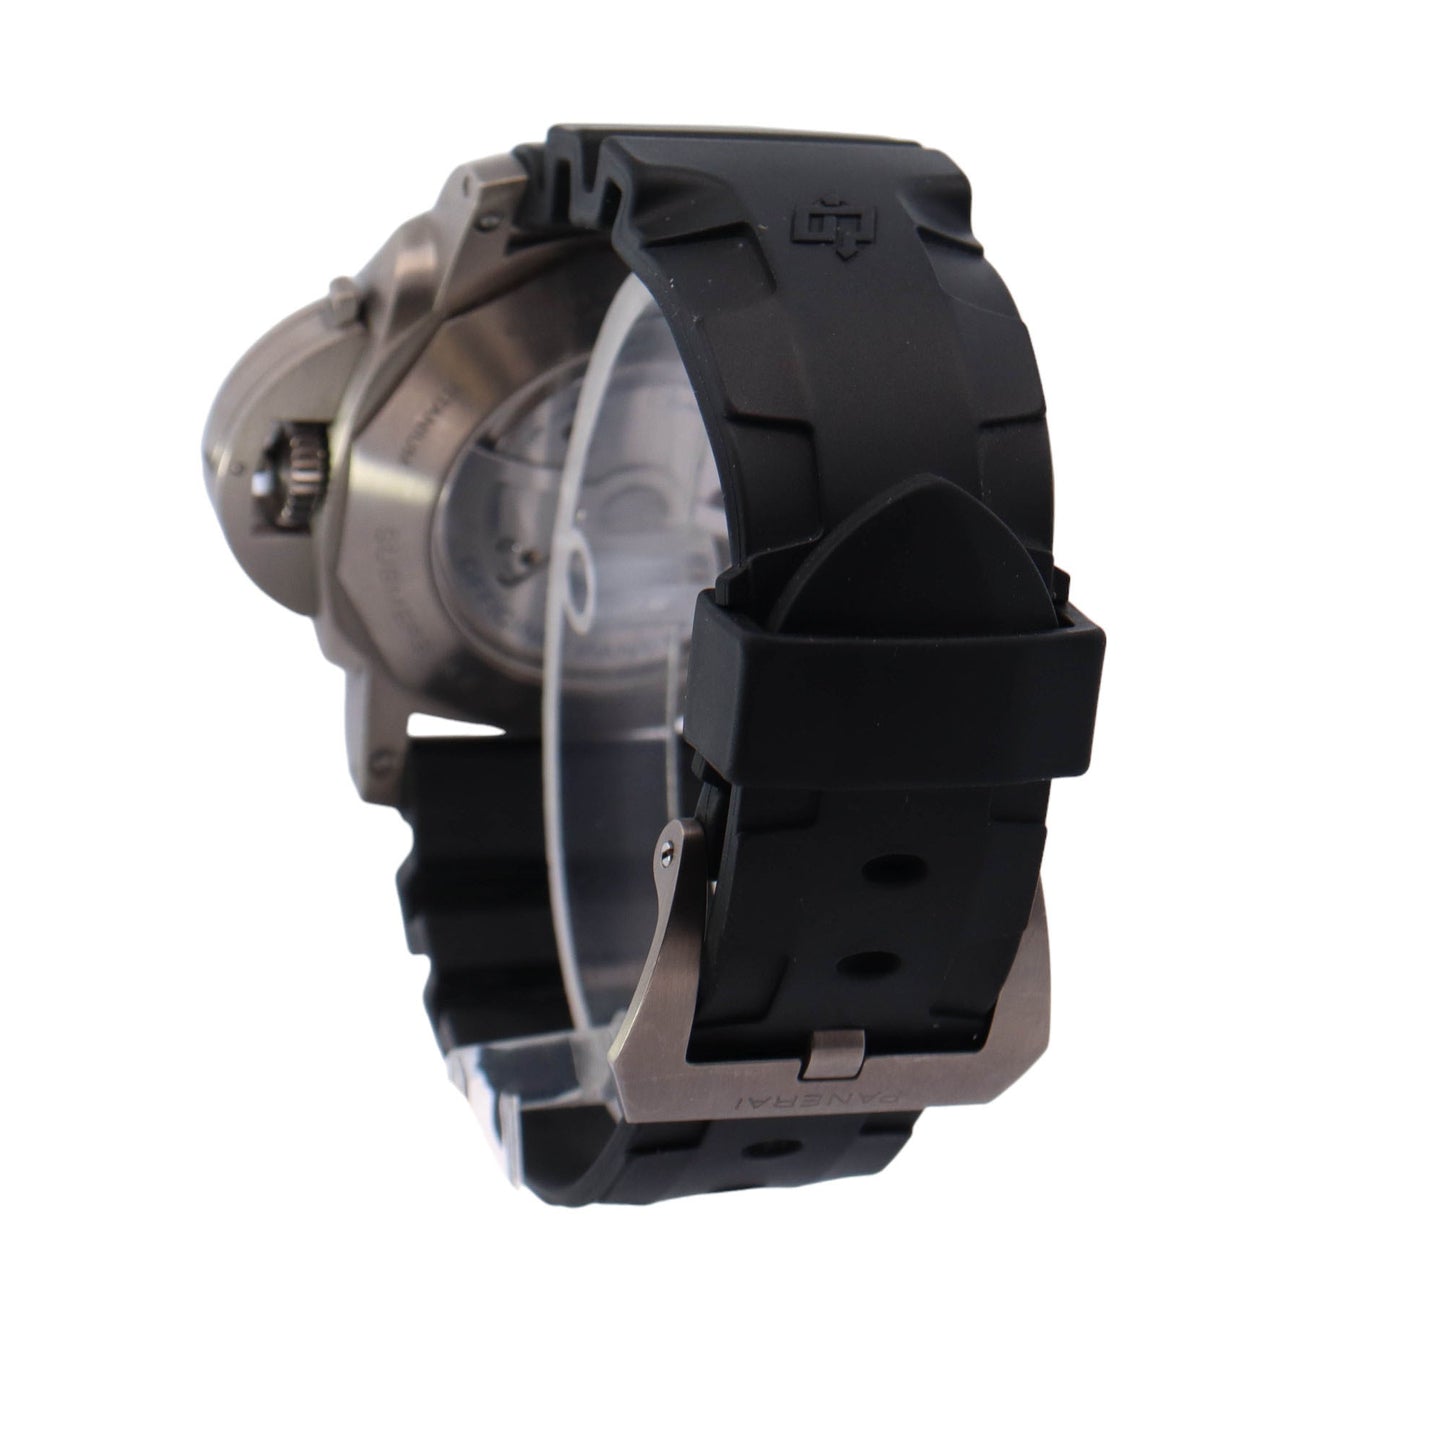 Panerai Luminor Submersible Titanium 47mm Black Dot Dial Watch Reference #: PAM00305 - Happy Jewelers Fine Jewelry Lifetime Warranty